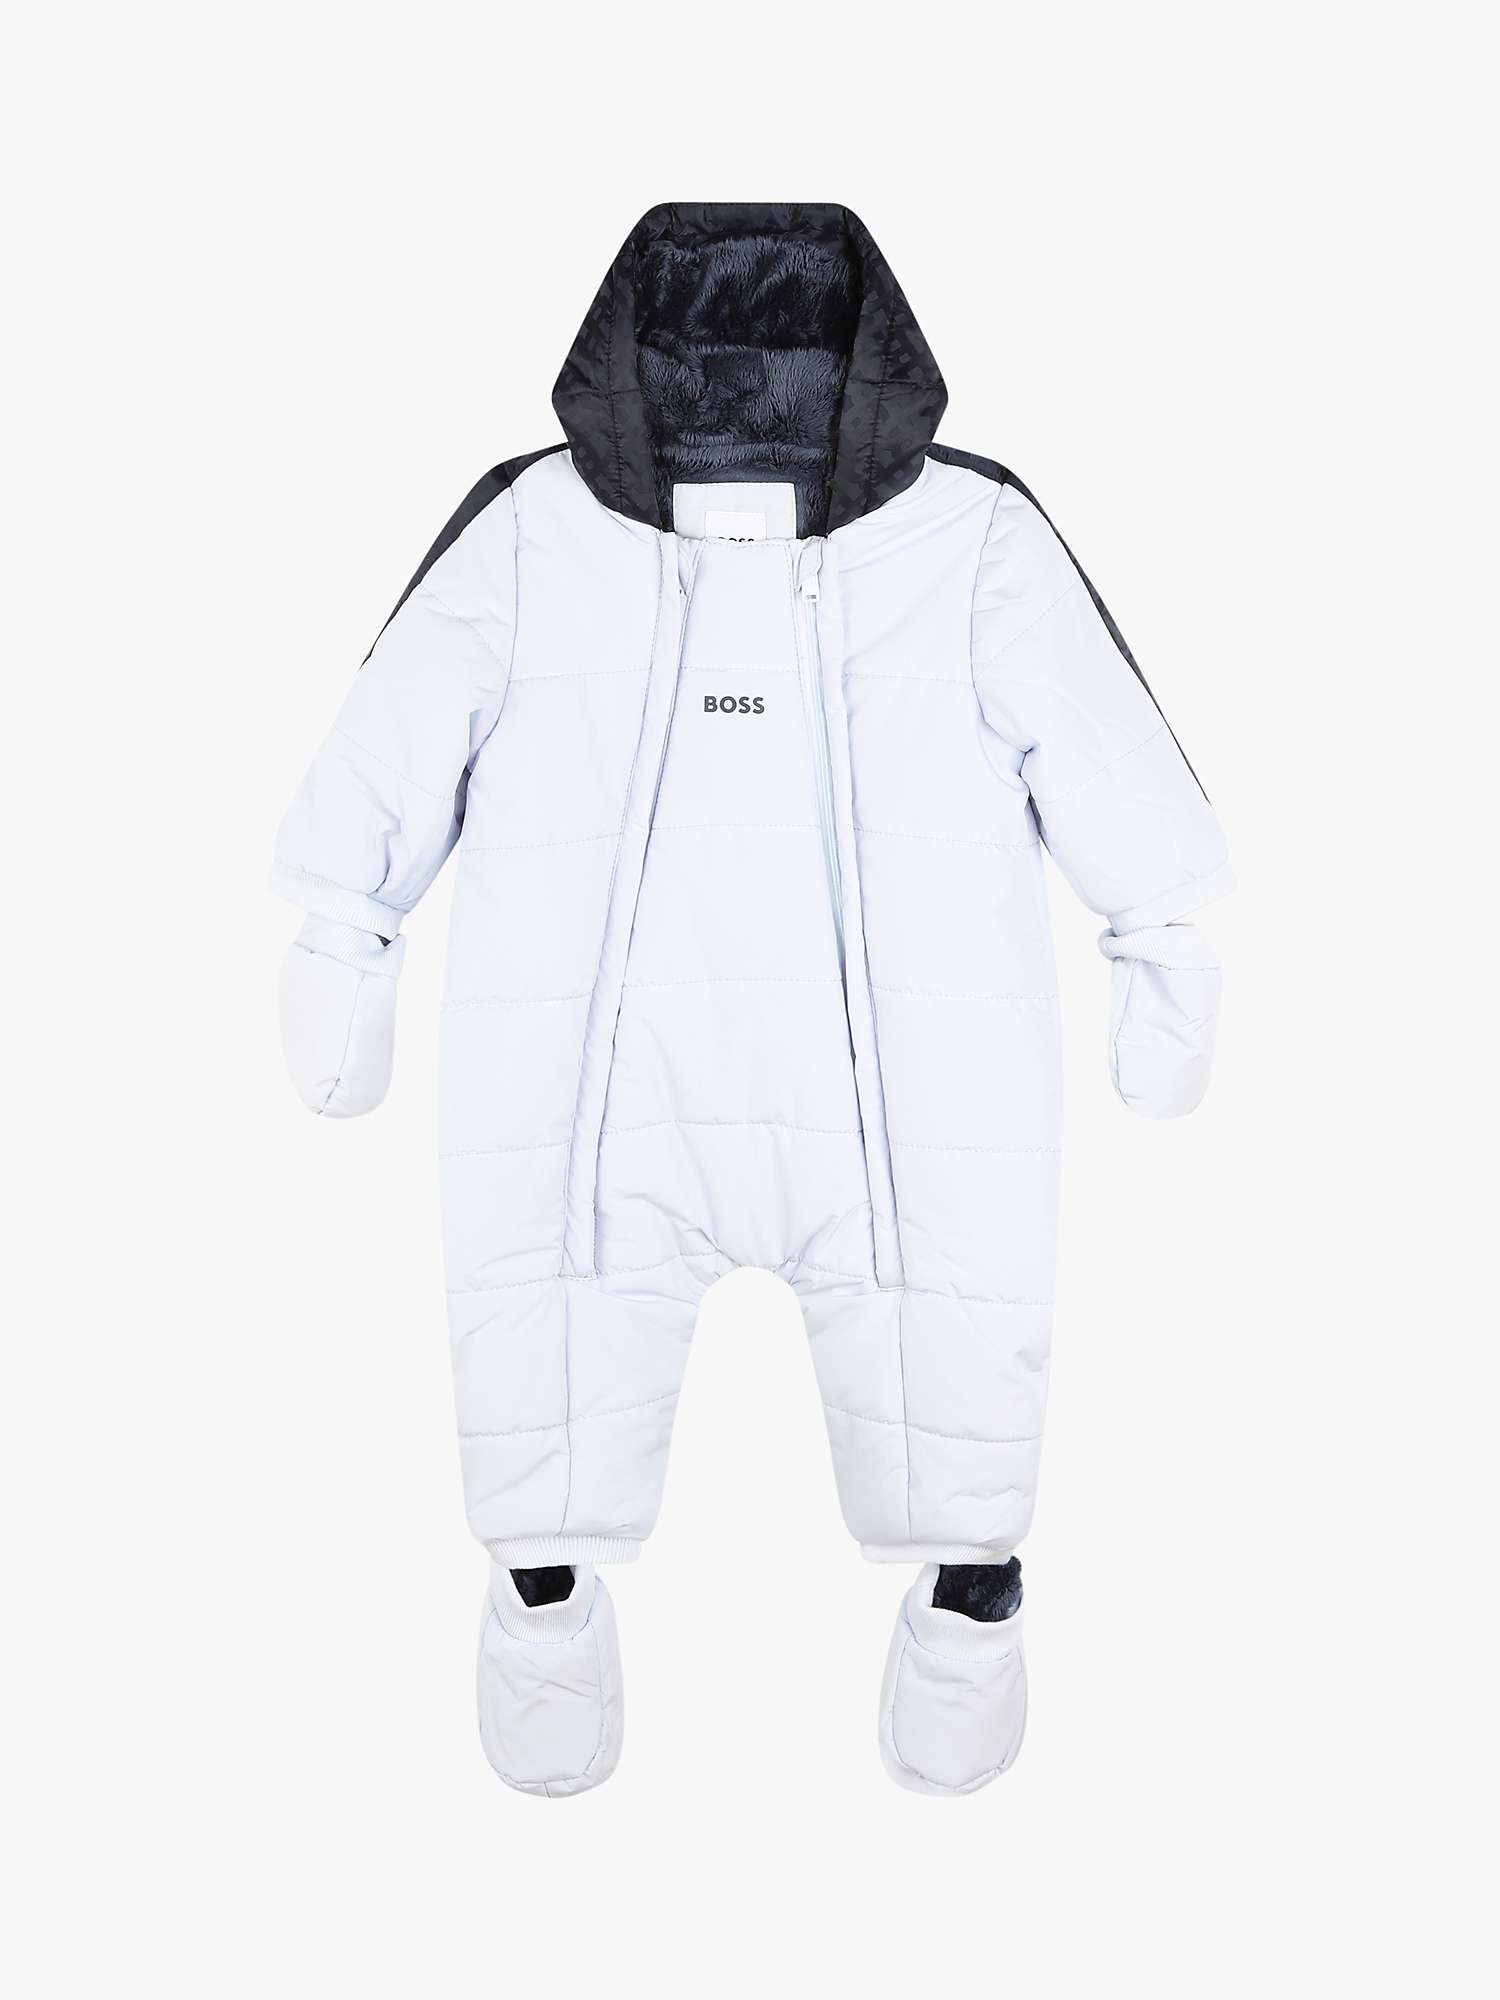 Buy BOSS Baby Snowsuit, Blue/Multi Online at johnlewis.com